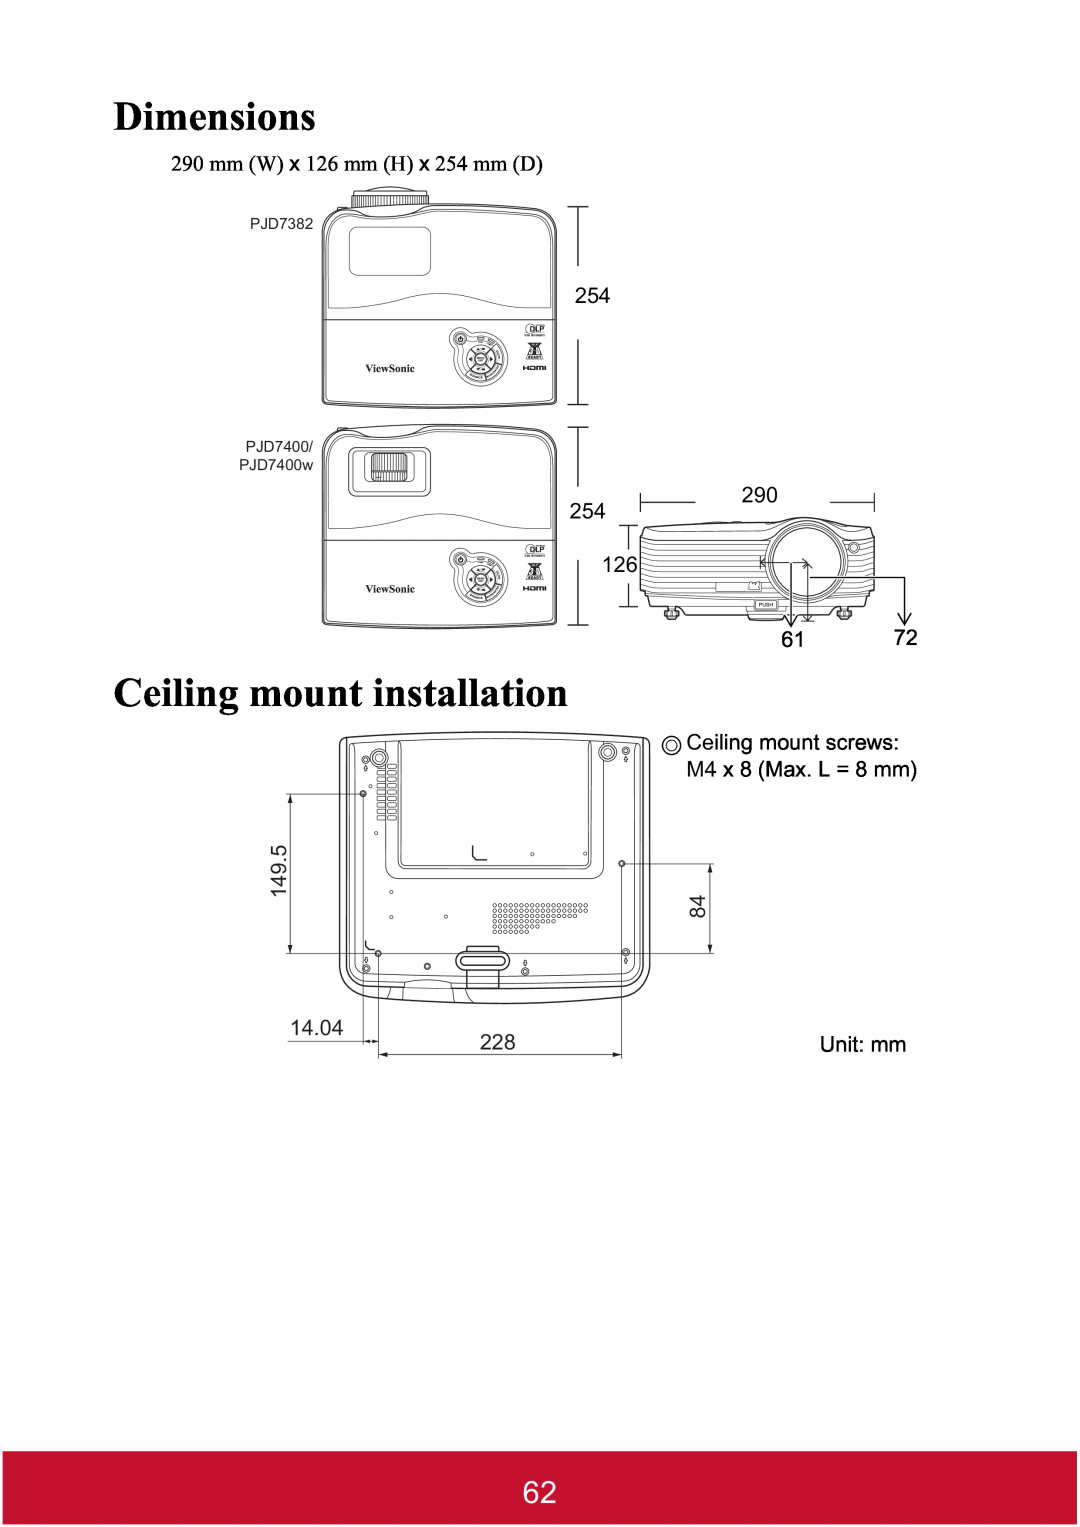 ViewSonic PJD7400W Dimensions, Ceiling mount installation, 254, 149.5, Ceiling mount screws M4 x 8 Max. L = 8 mm, 14.04 